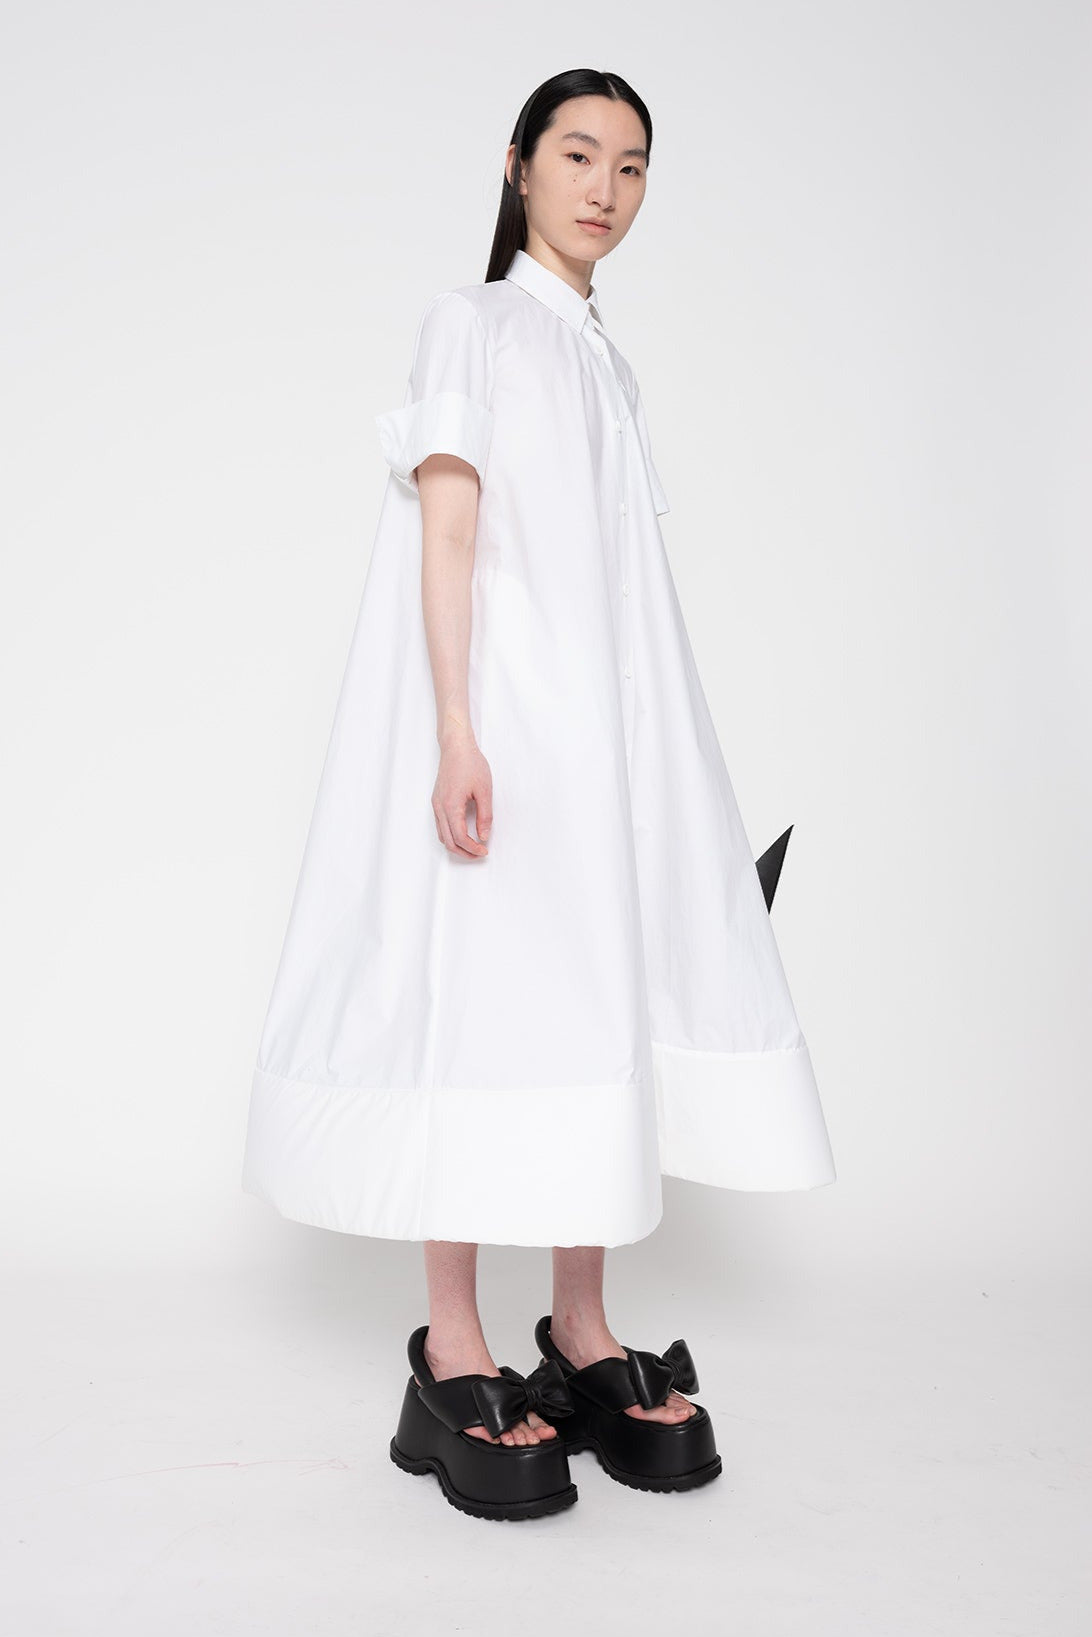 THREE-QUARTERS-VIEW-BRUNETTE-WOMAN-white-a-line-shaped-cotton-dress-with-foam-hem-detail-WEARING-BOW-PLATFORM-SANDALS-IN-BLACK